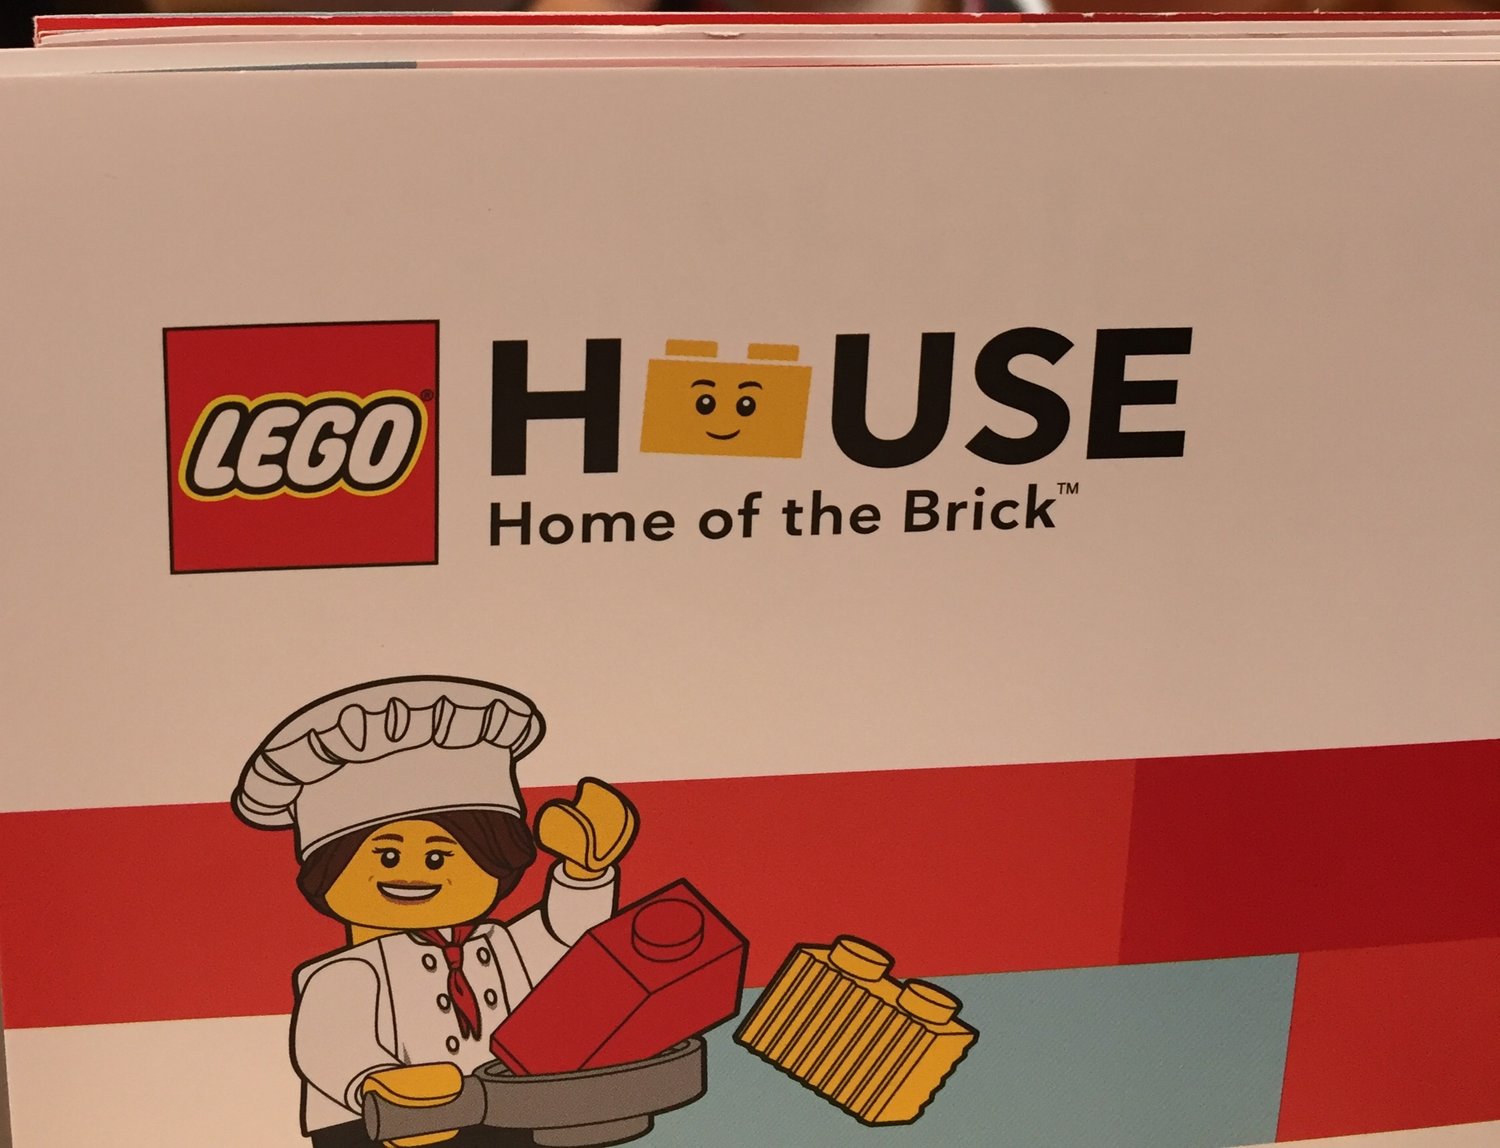  LEGO Brick Lunch - Red : Home & Kitchen